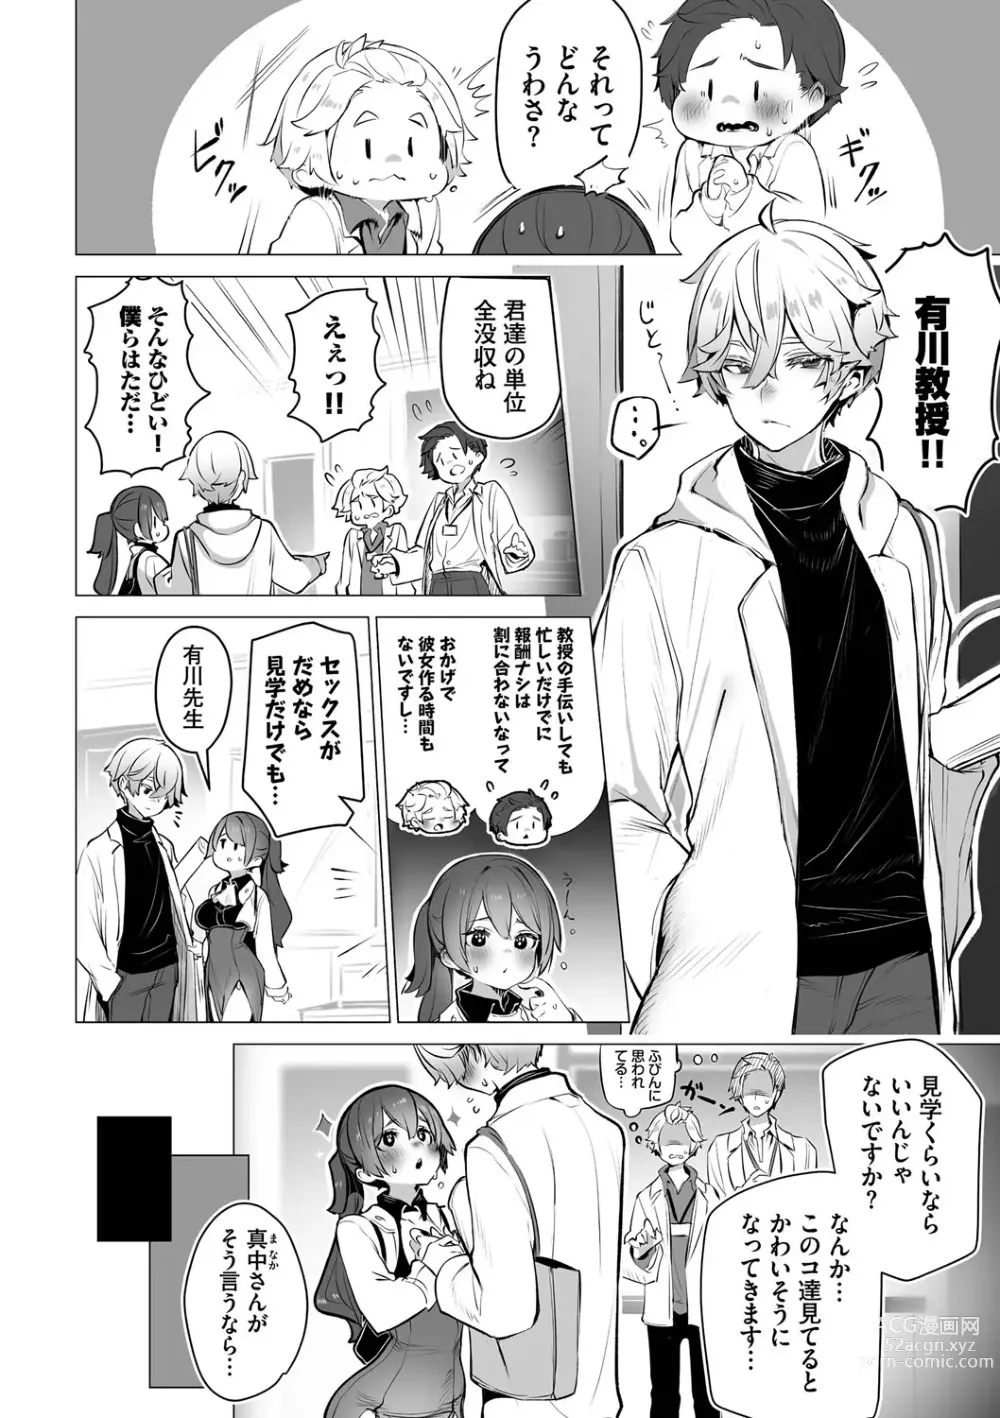 Page 195 of manga Tokyo Black Box 1